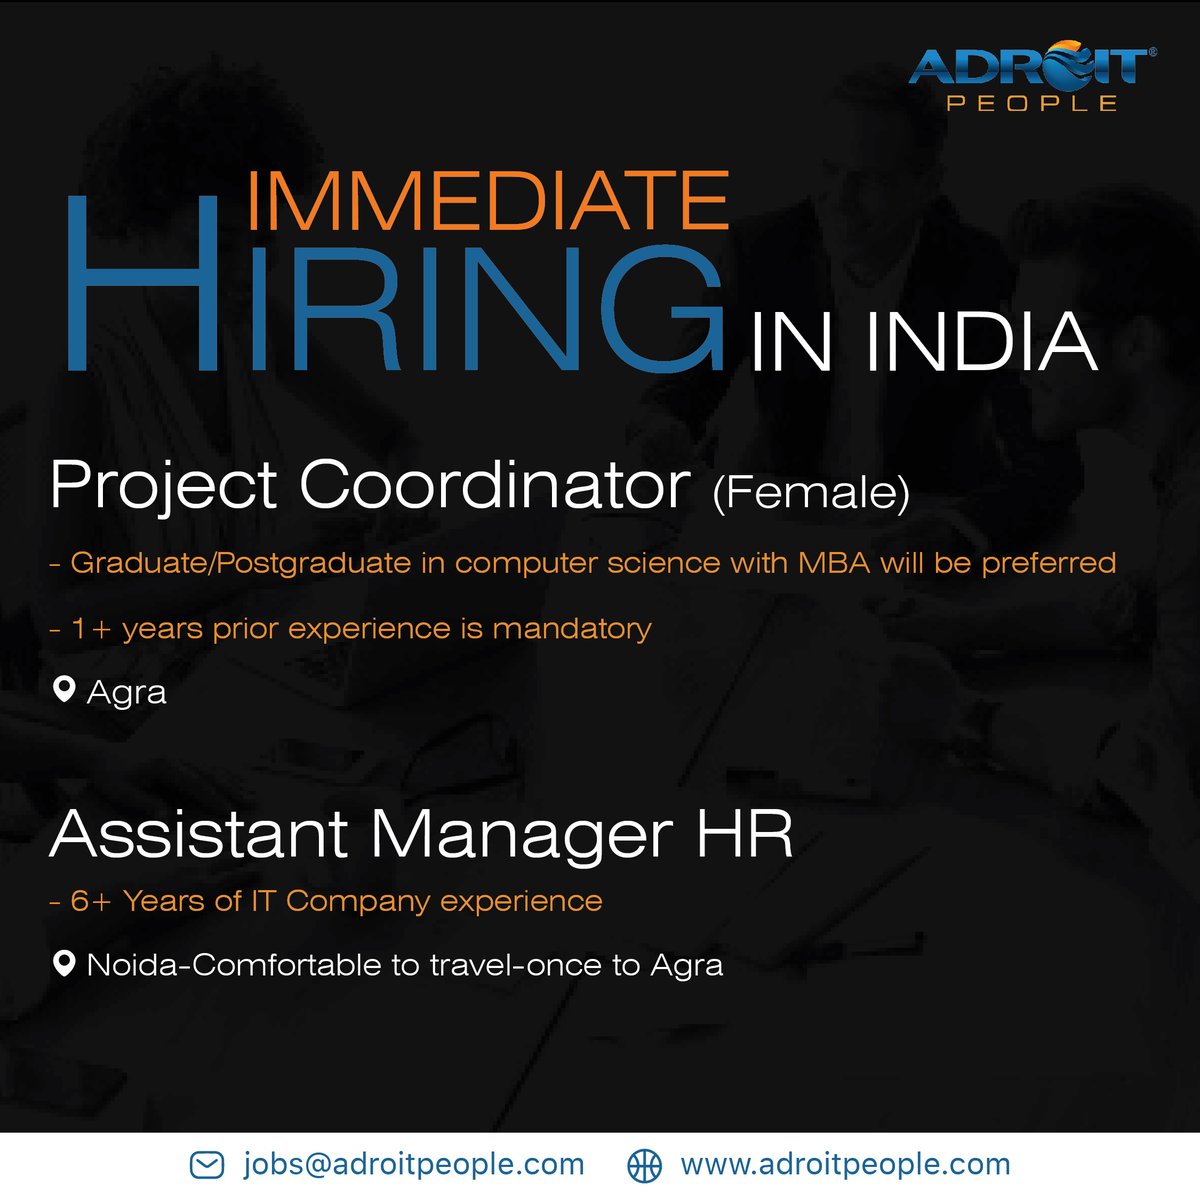 #immediatehire in #India

Please send your resume to jobs@adroitpeople.com

#projectcoordinatorjob #hrmanagerjobs #agra #jobsinagra #jobsinindia #HIRINGNOW